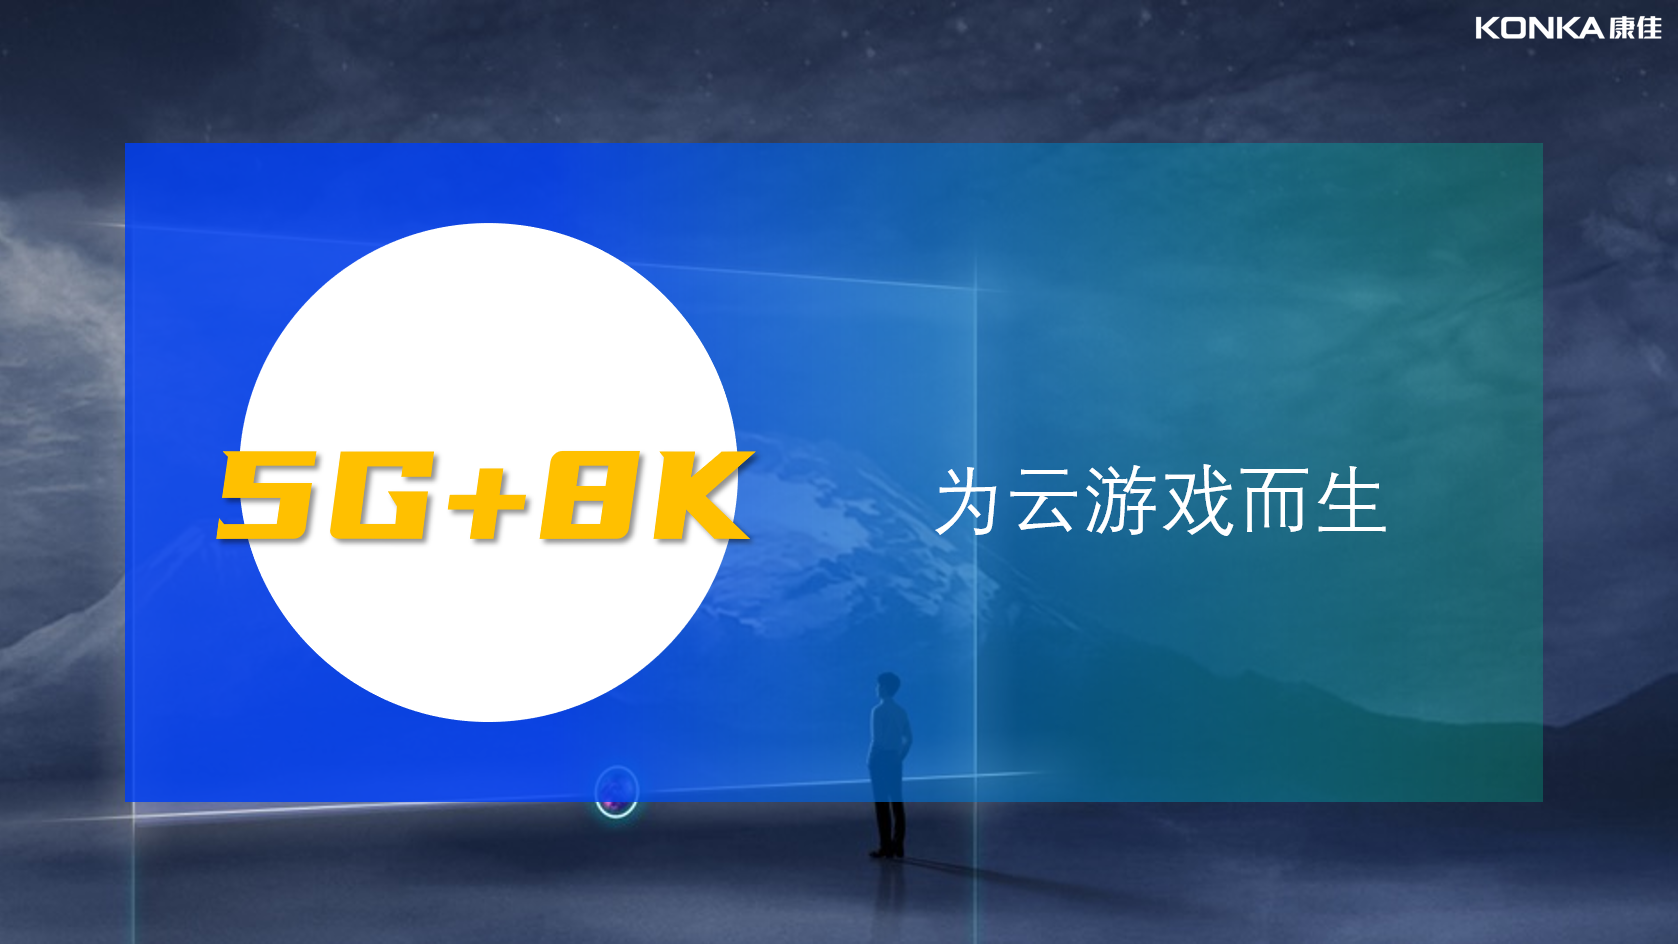  5G+8K加持，康佳打造“短视频+云游戏”大屏新生态